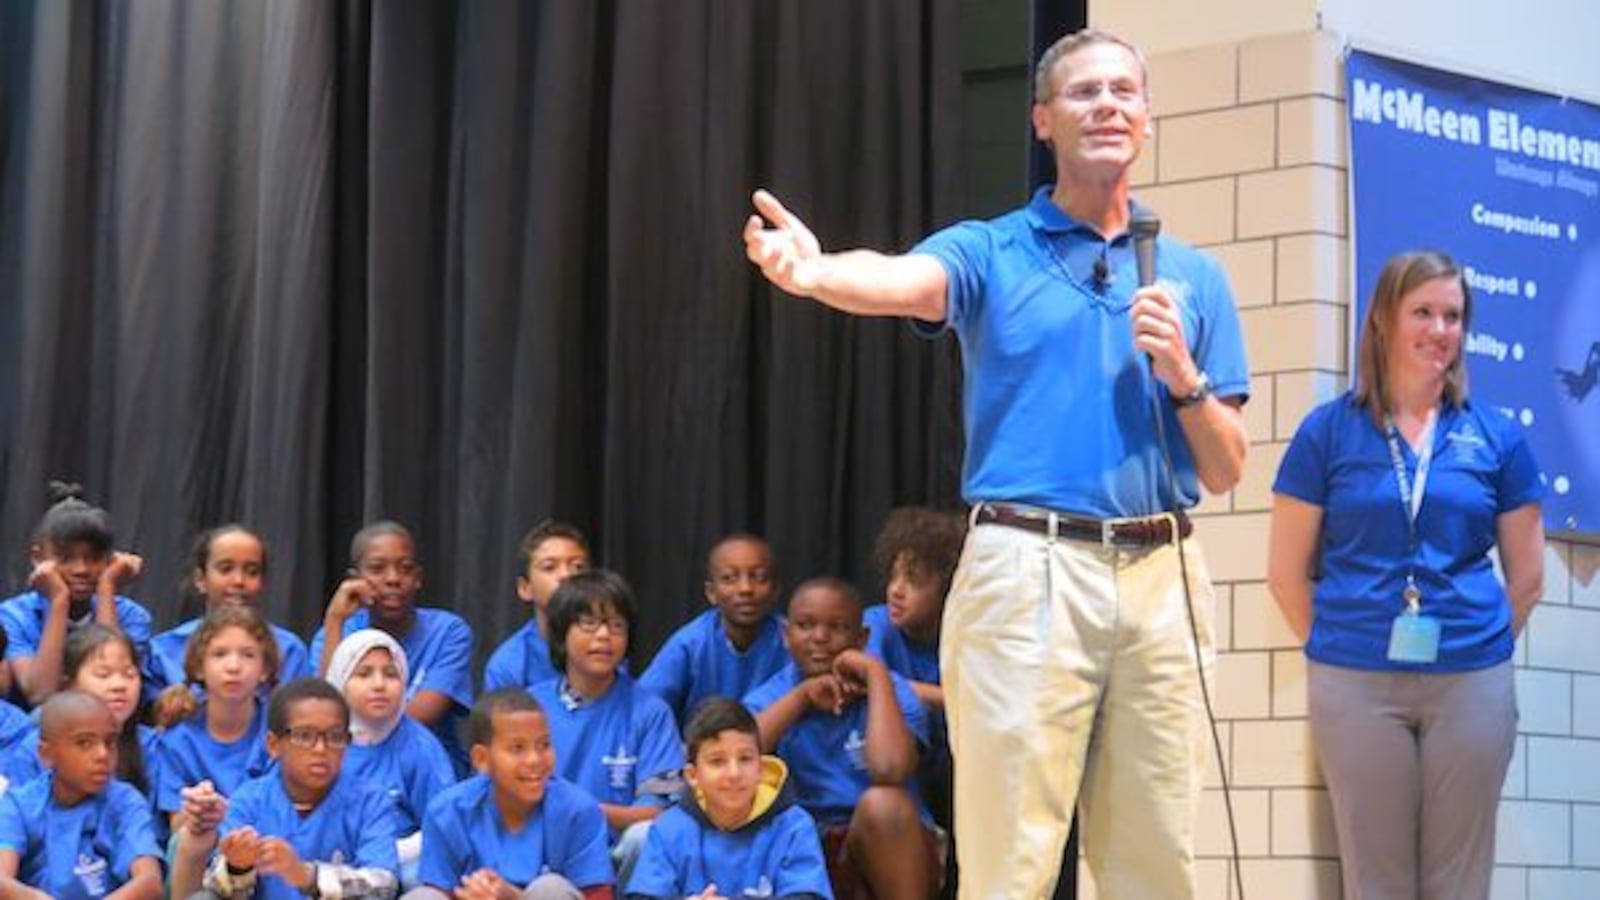 Denver superintendent Tom Boasberg speaks to students at Denver's McMeen Elementary School in 2014.